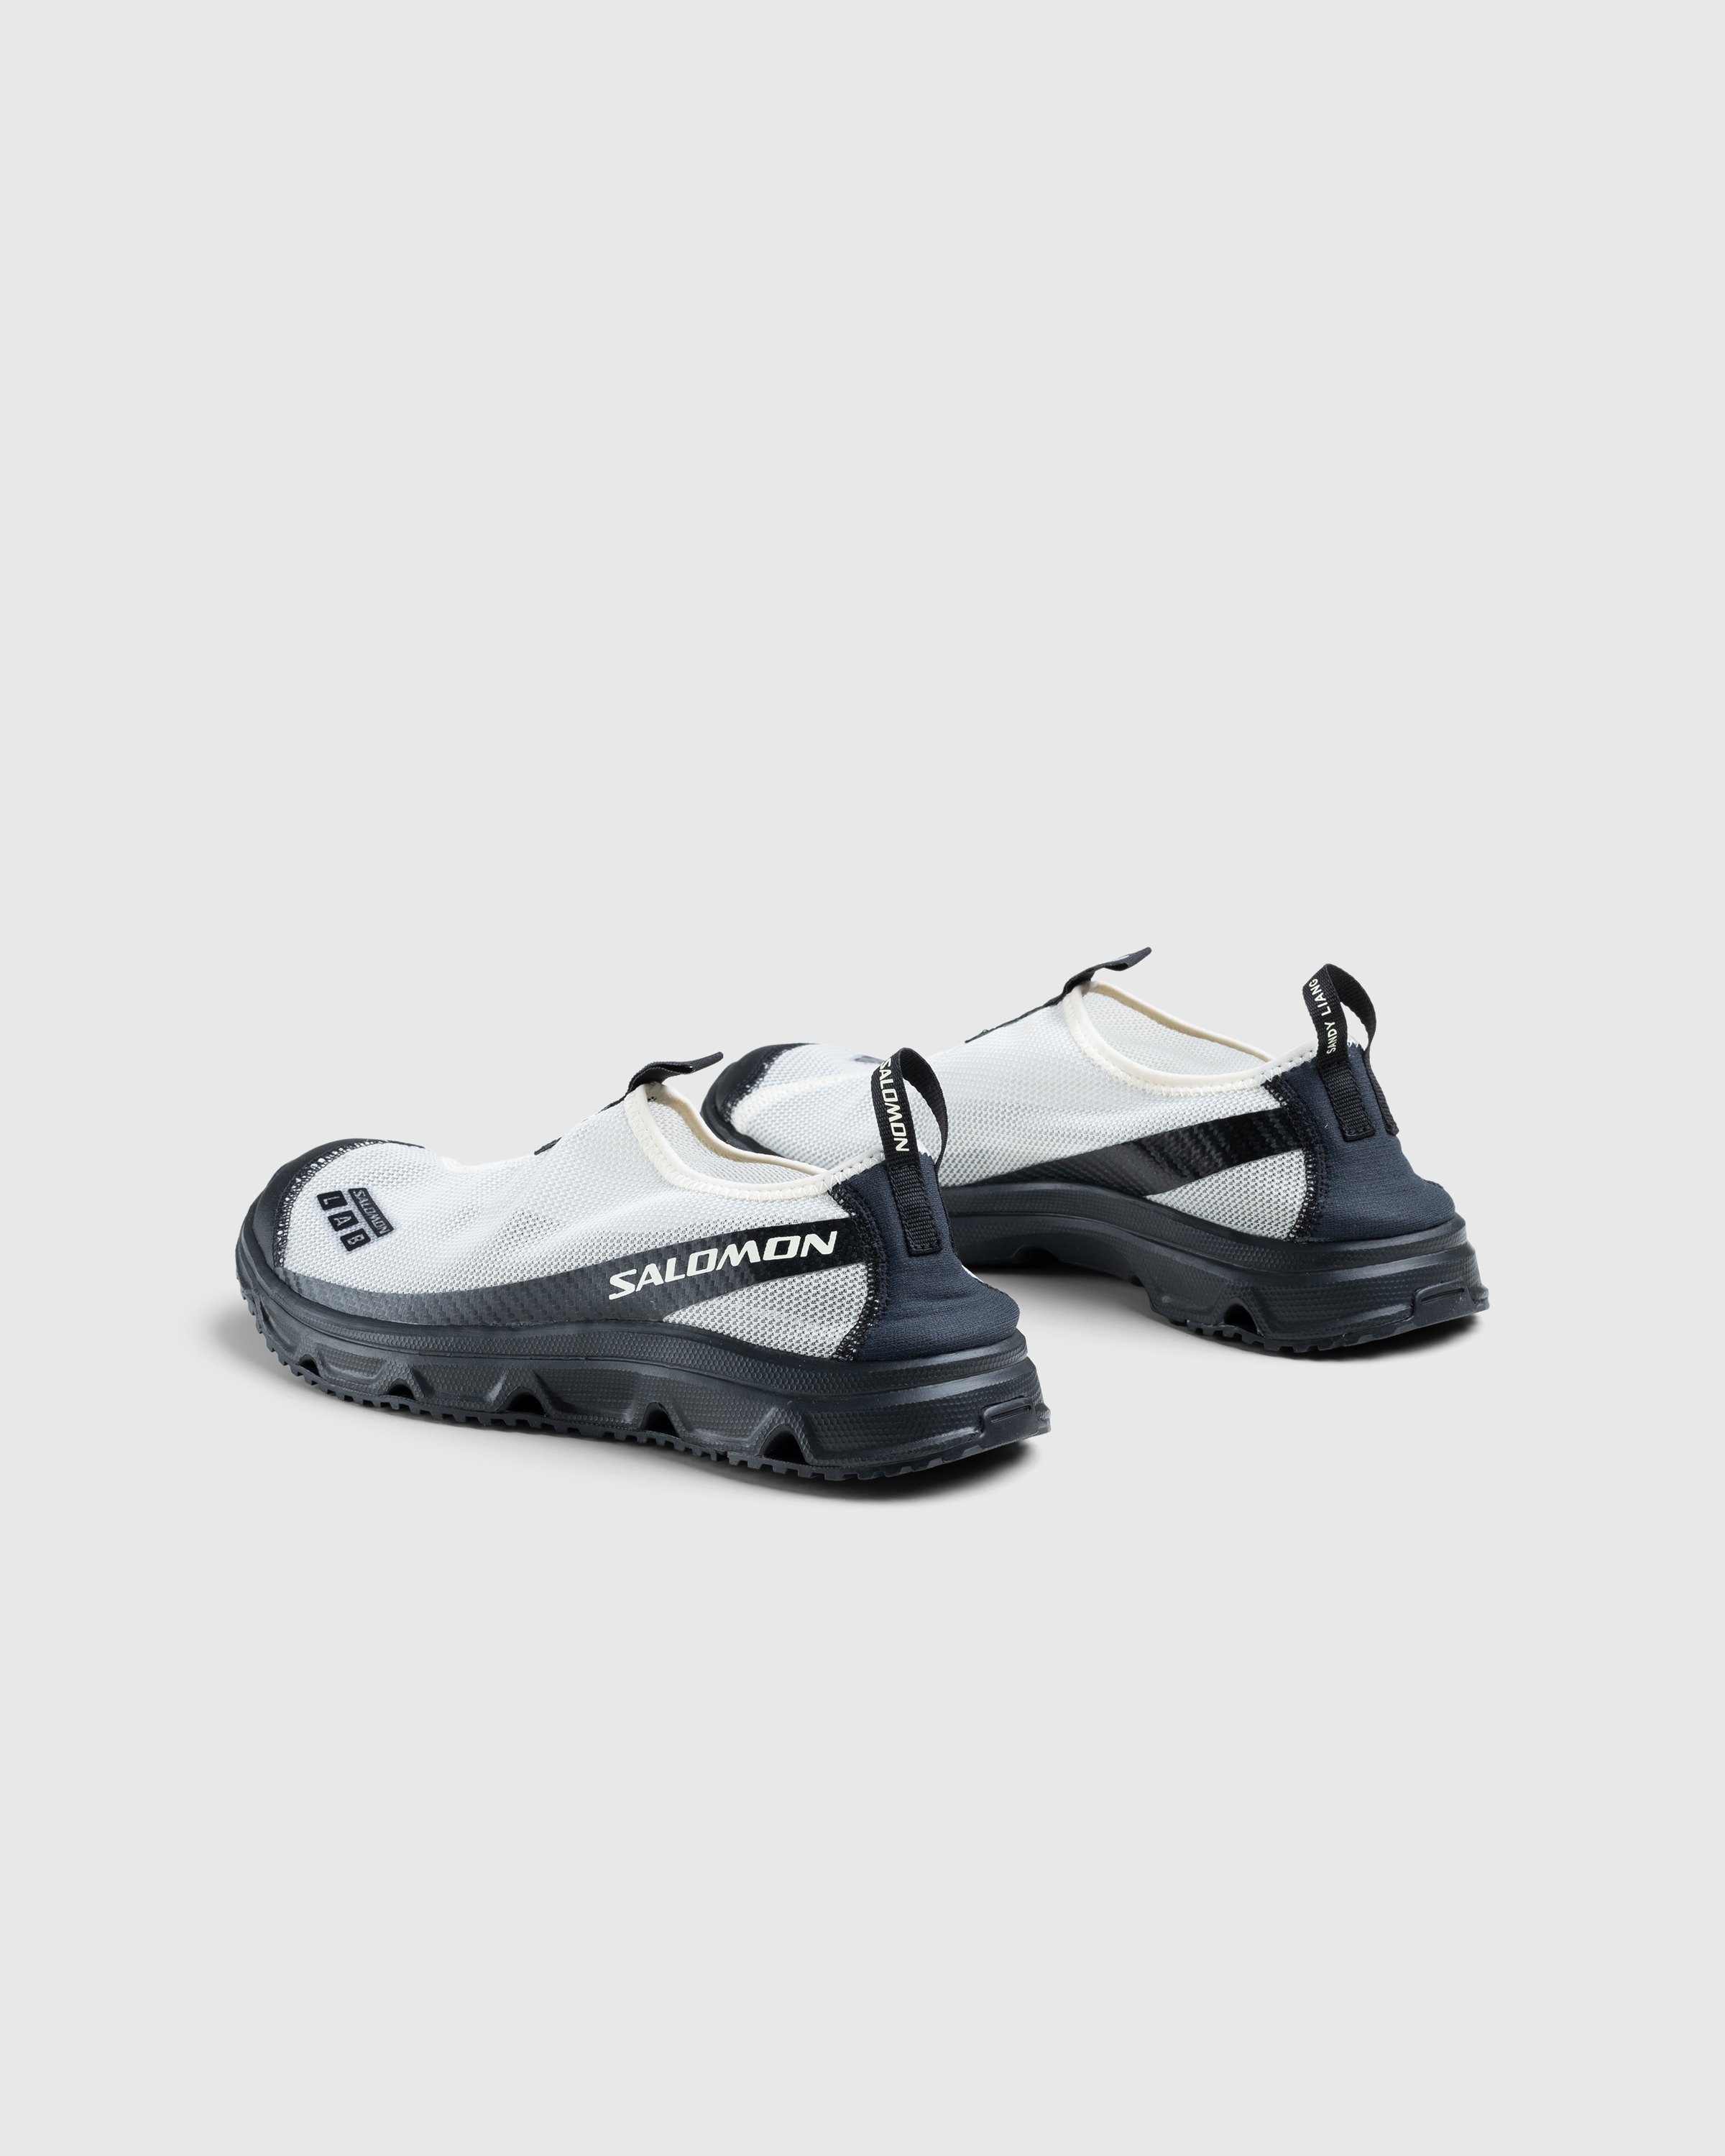 Salomon x Sandy Liang - RX Moc 3.0 Black - Footwear - Black - Image 4